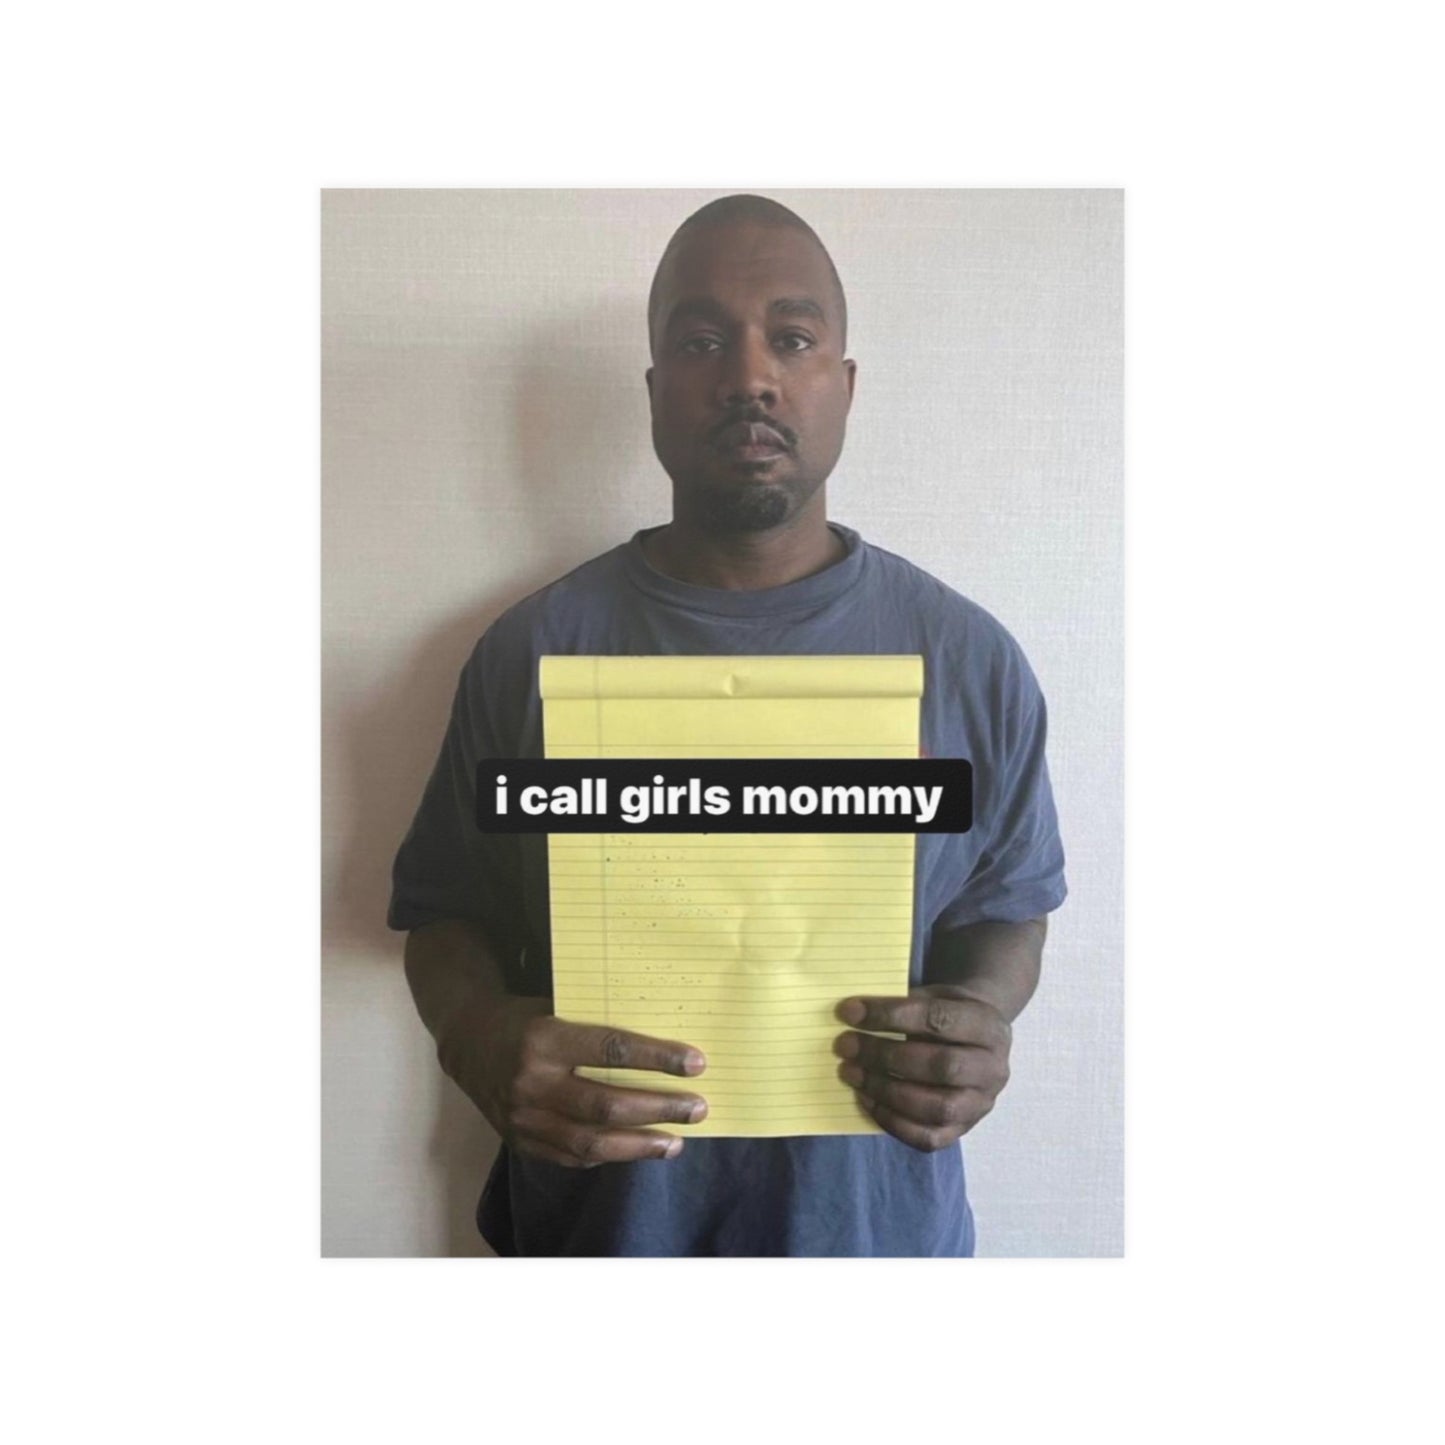 Kanye calls girls mommy, but dont we all? Meme Poster.